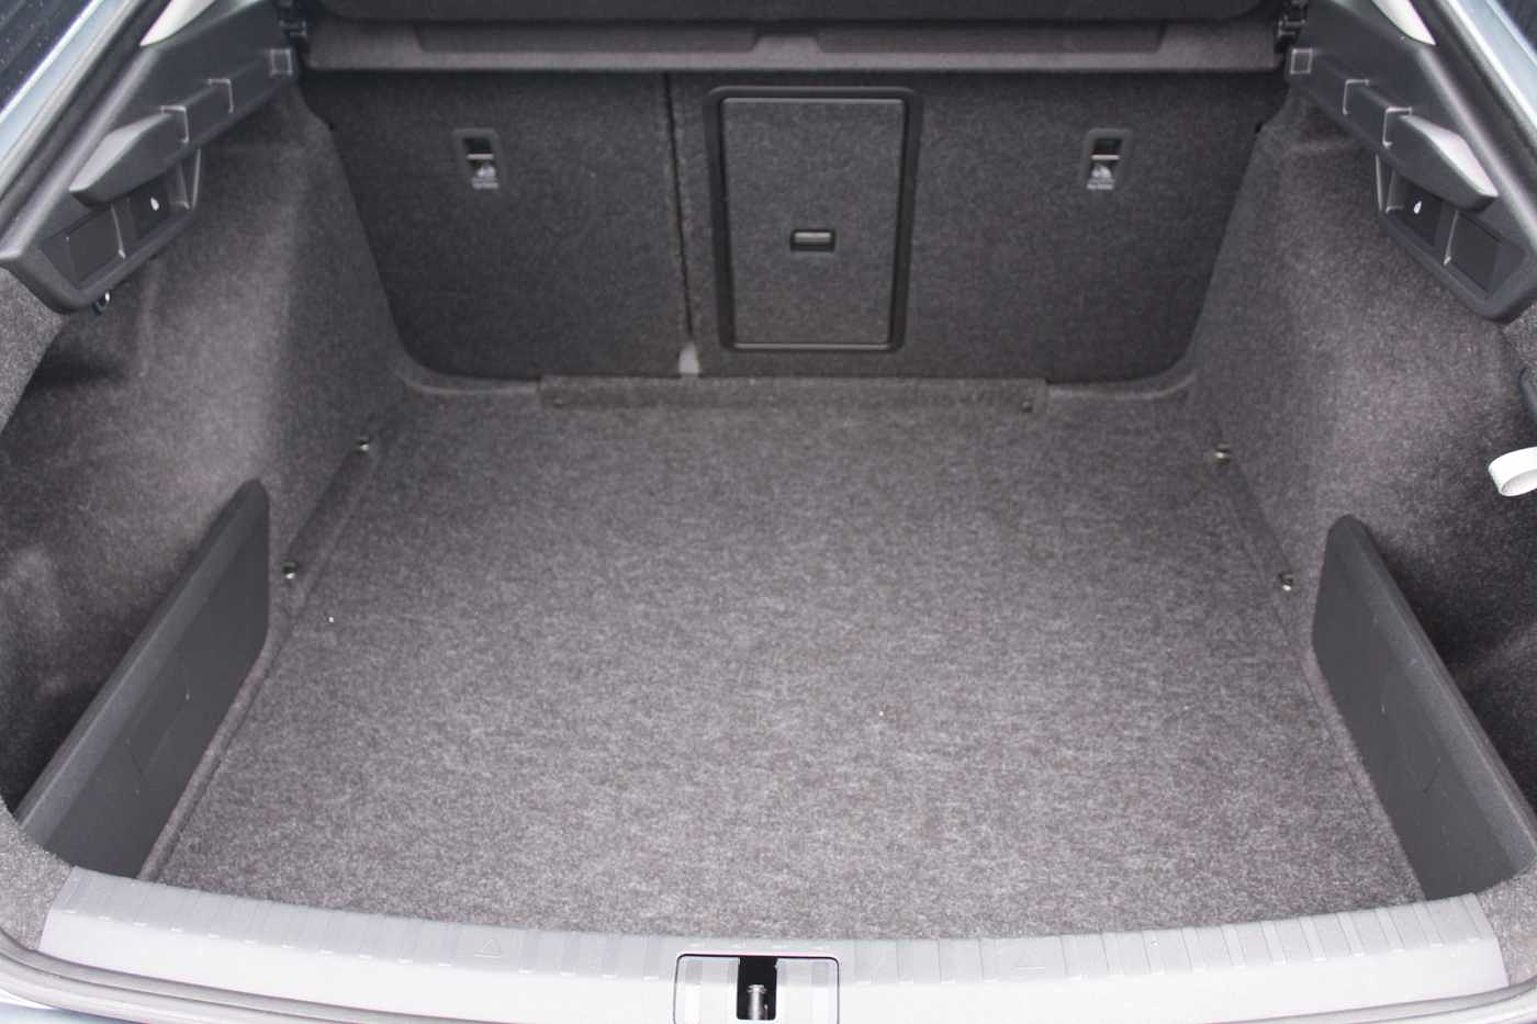 SKODA Octavia TSI (110ps) SE Technology Hatchback